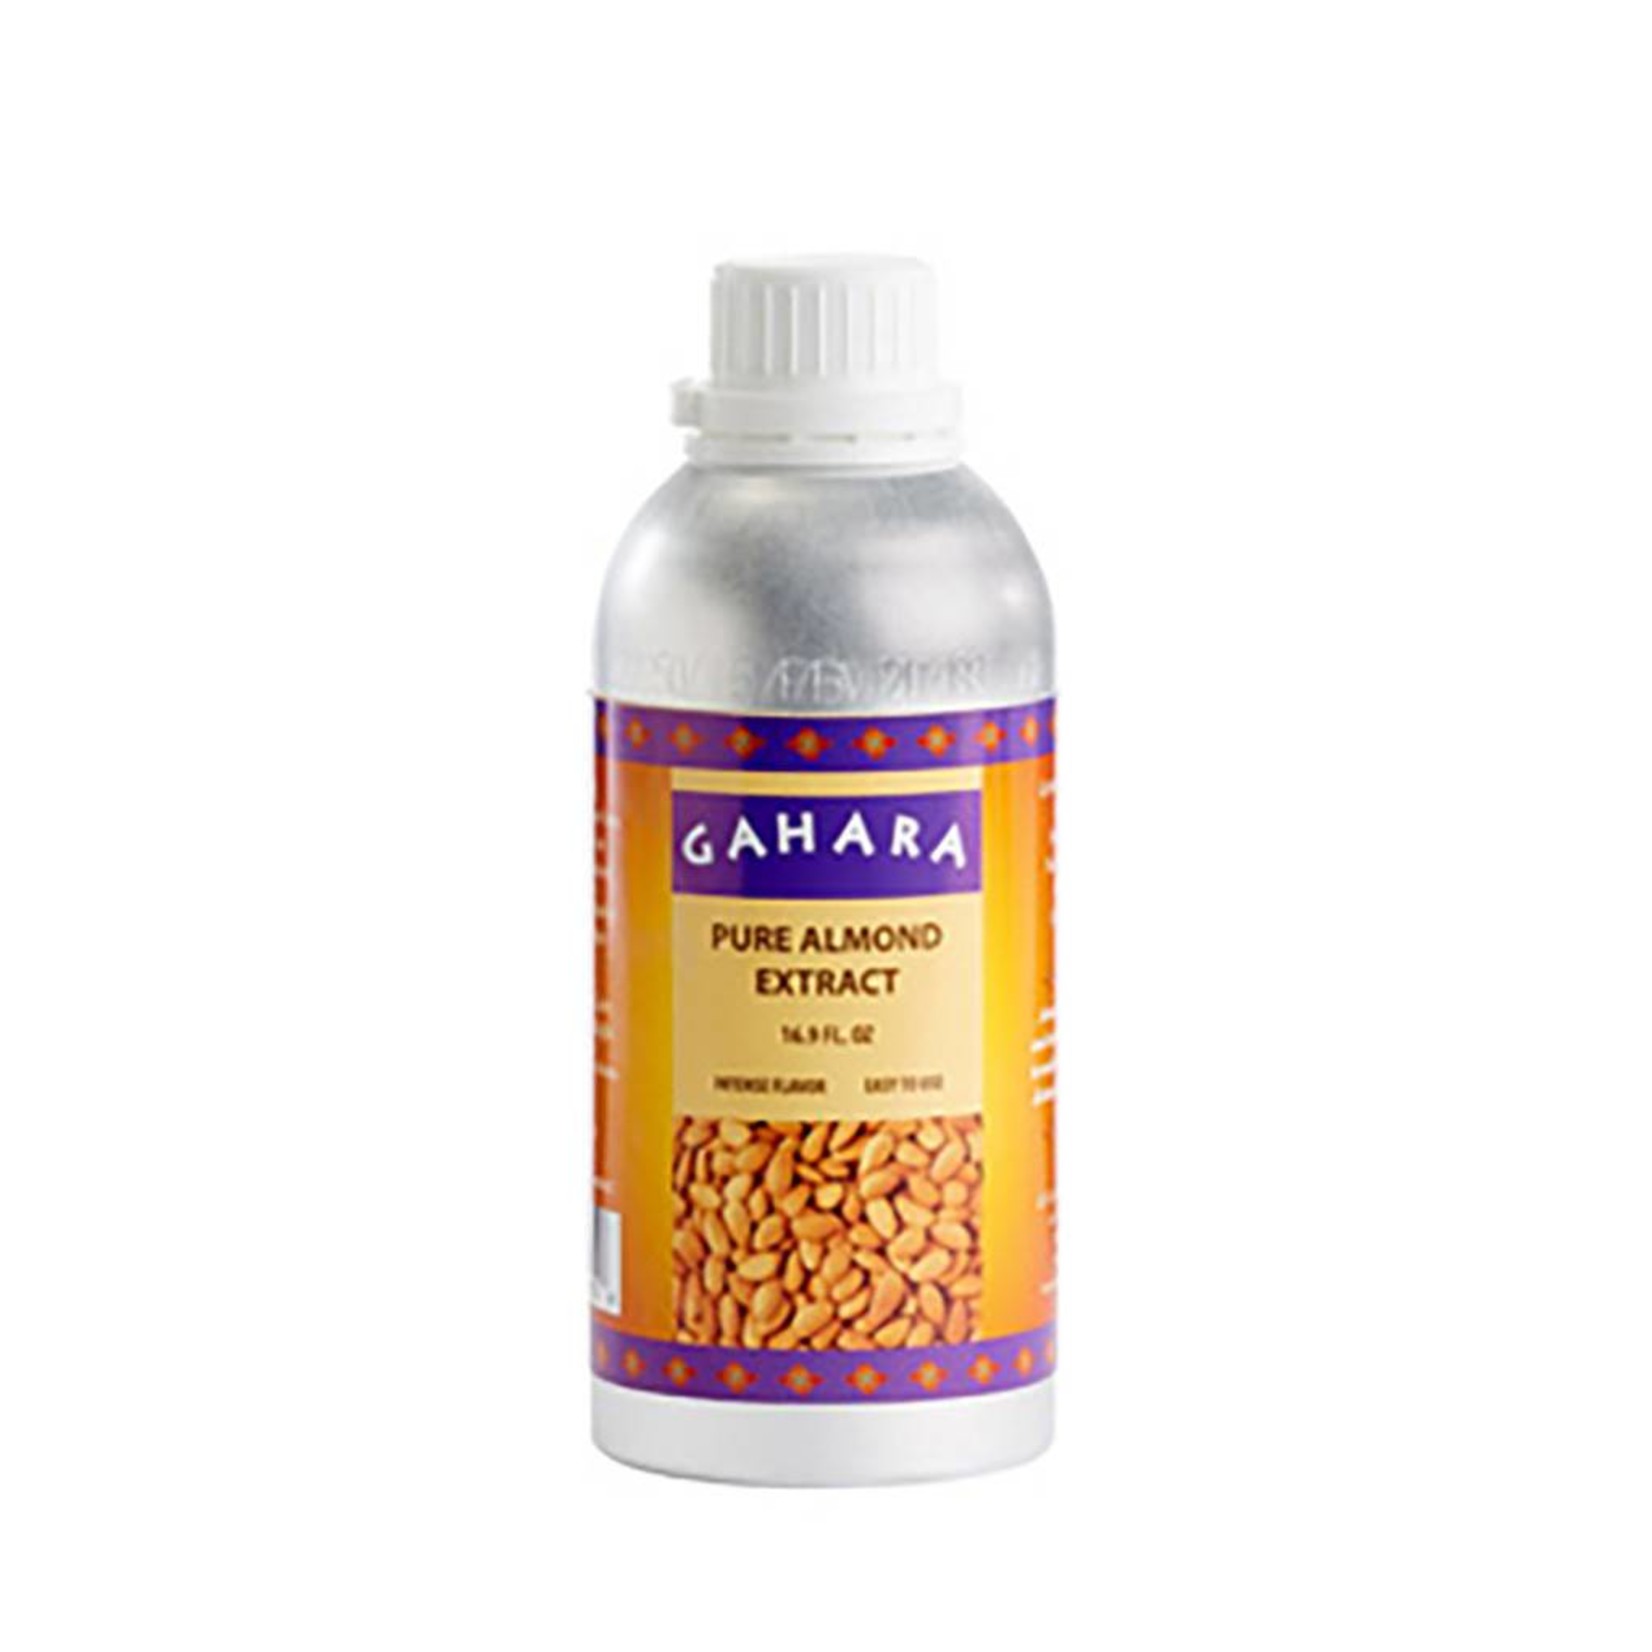 Gahara Gahara - Almond Extract - 16.9 oz